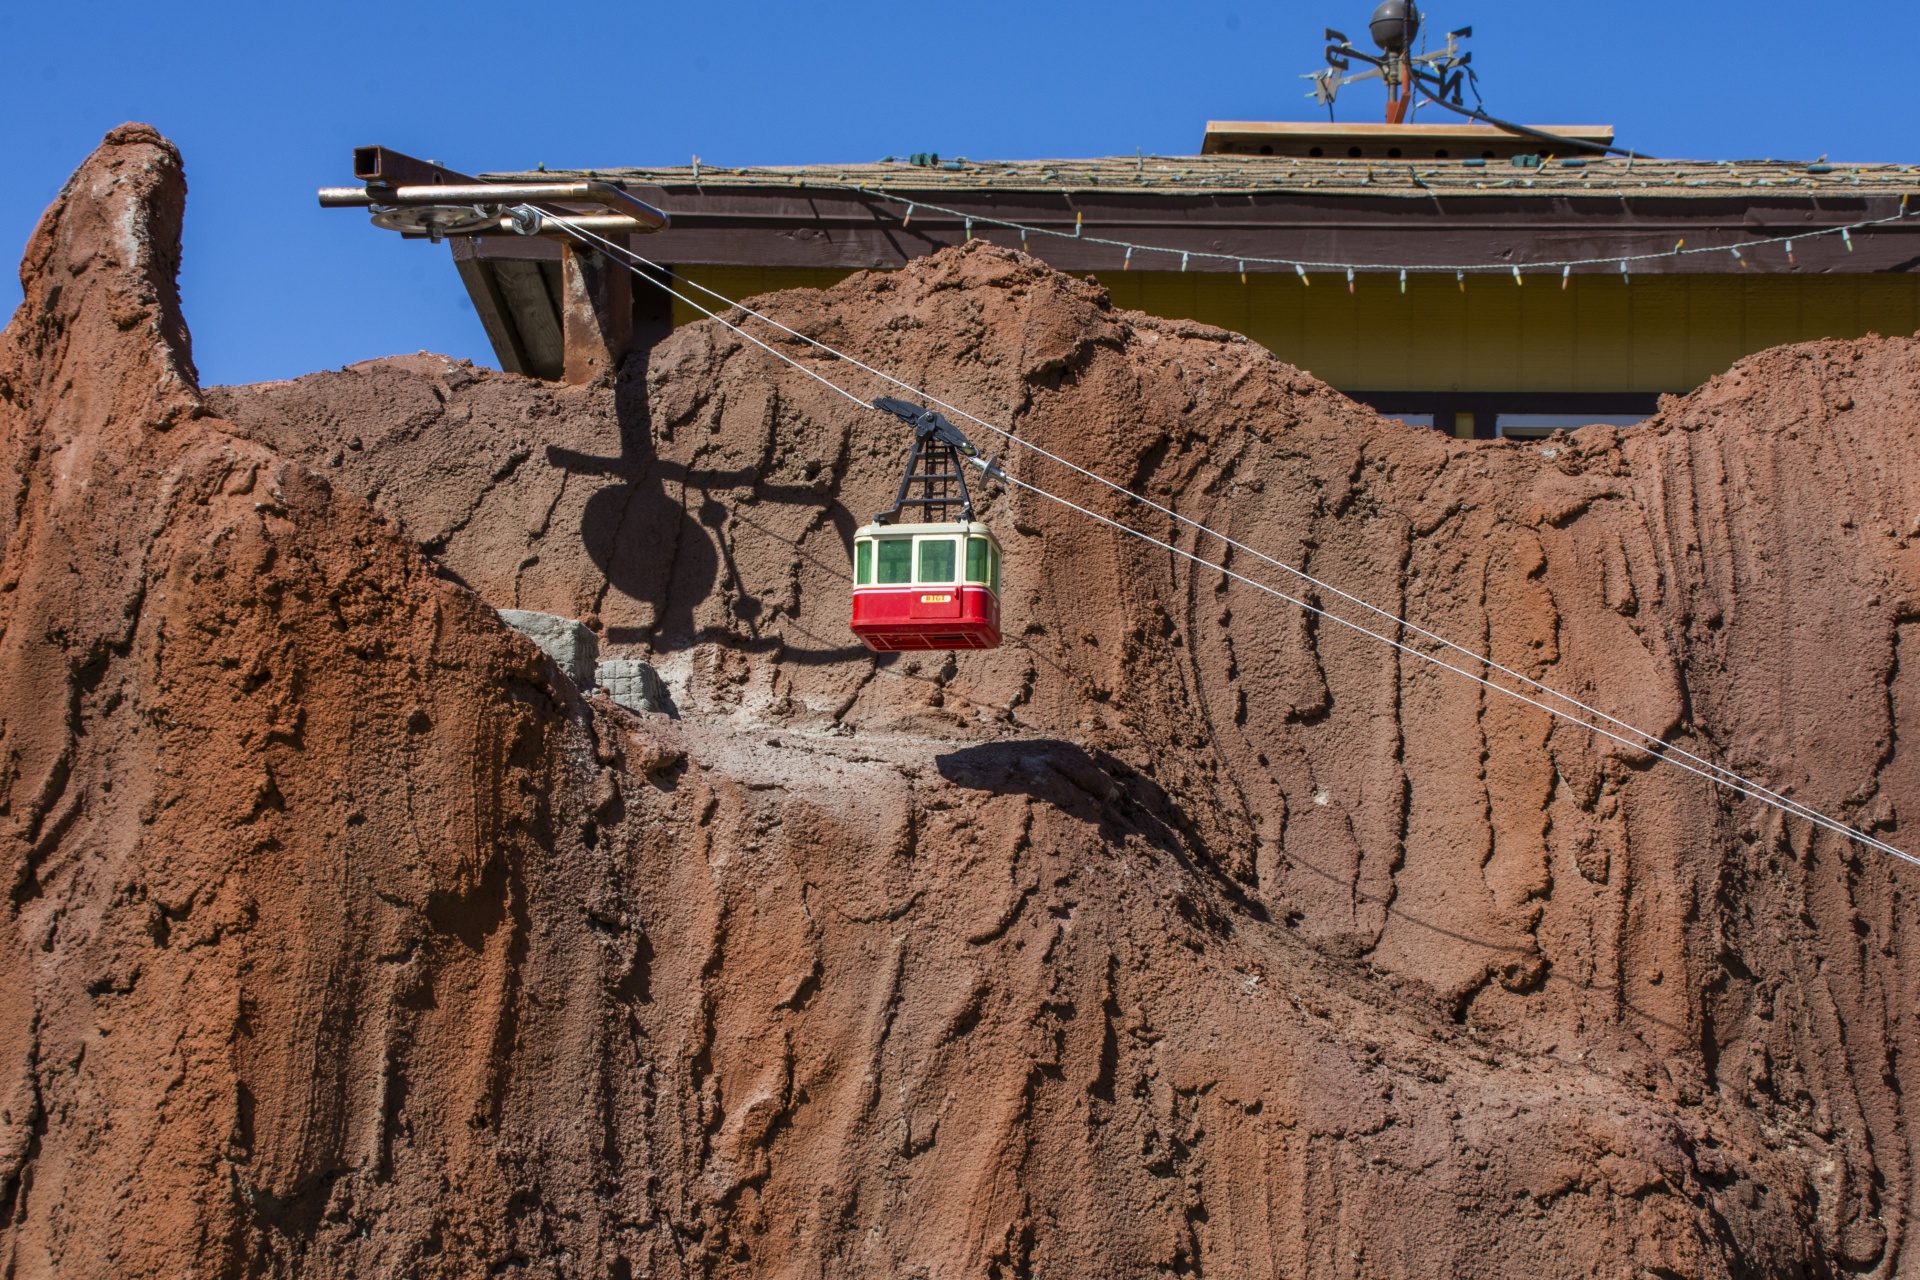 tram climbing up a red-rock mountain in a miniature train exhibit